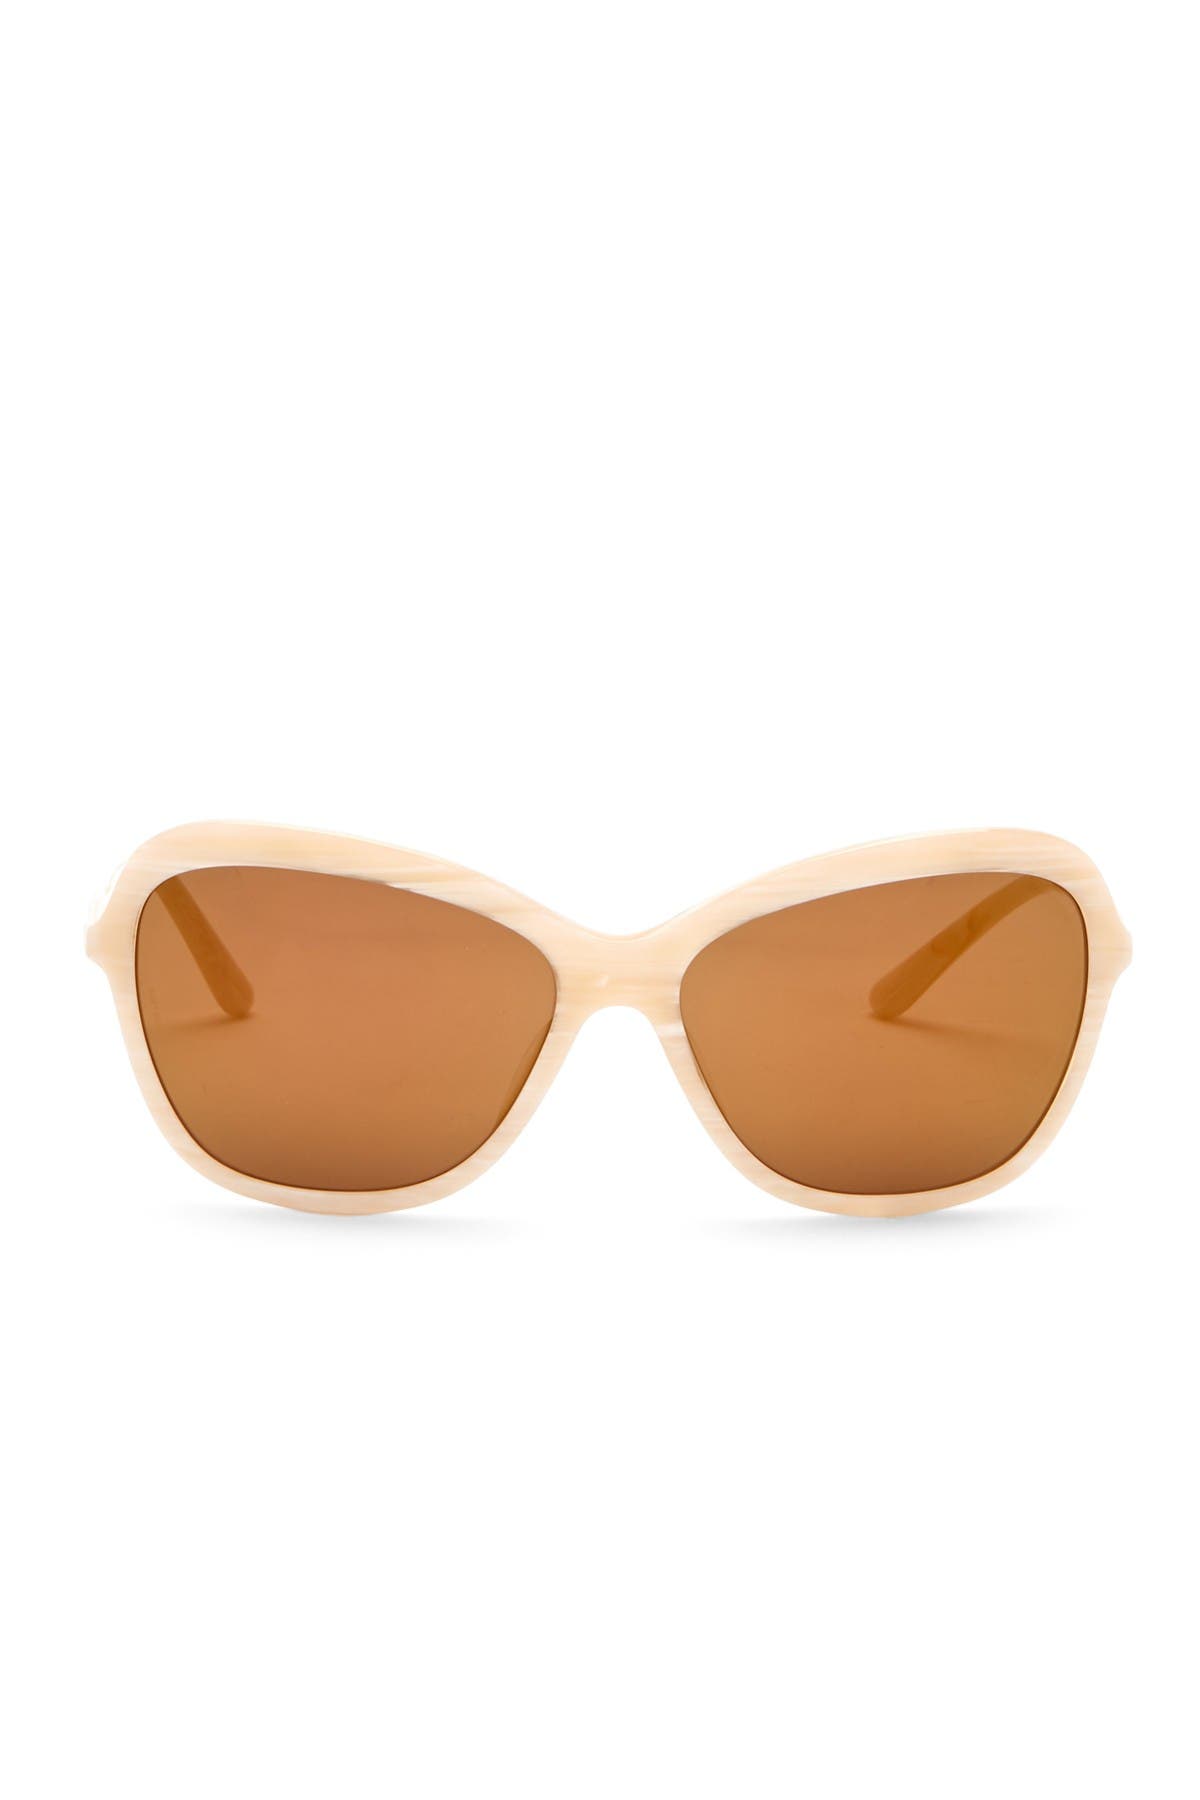 dolce gabbana butterfly sunglasses